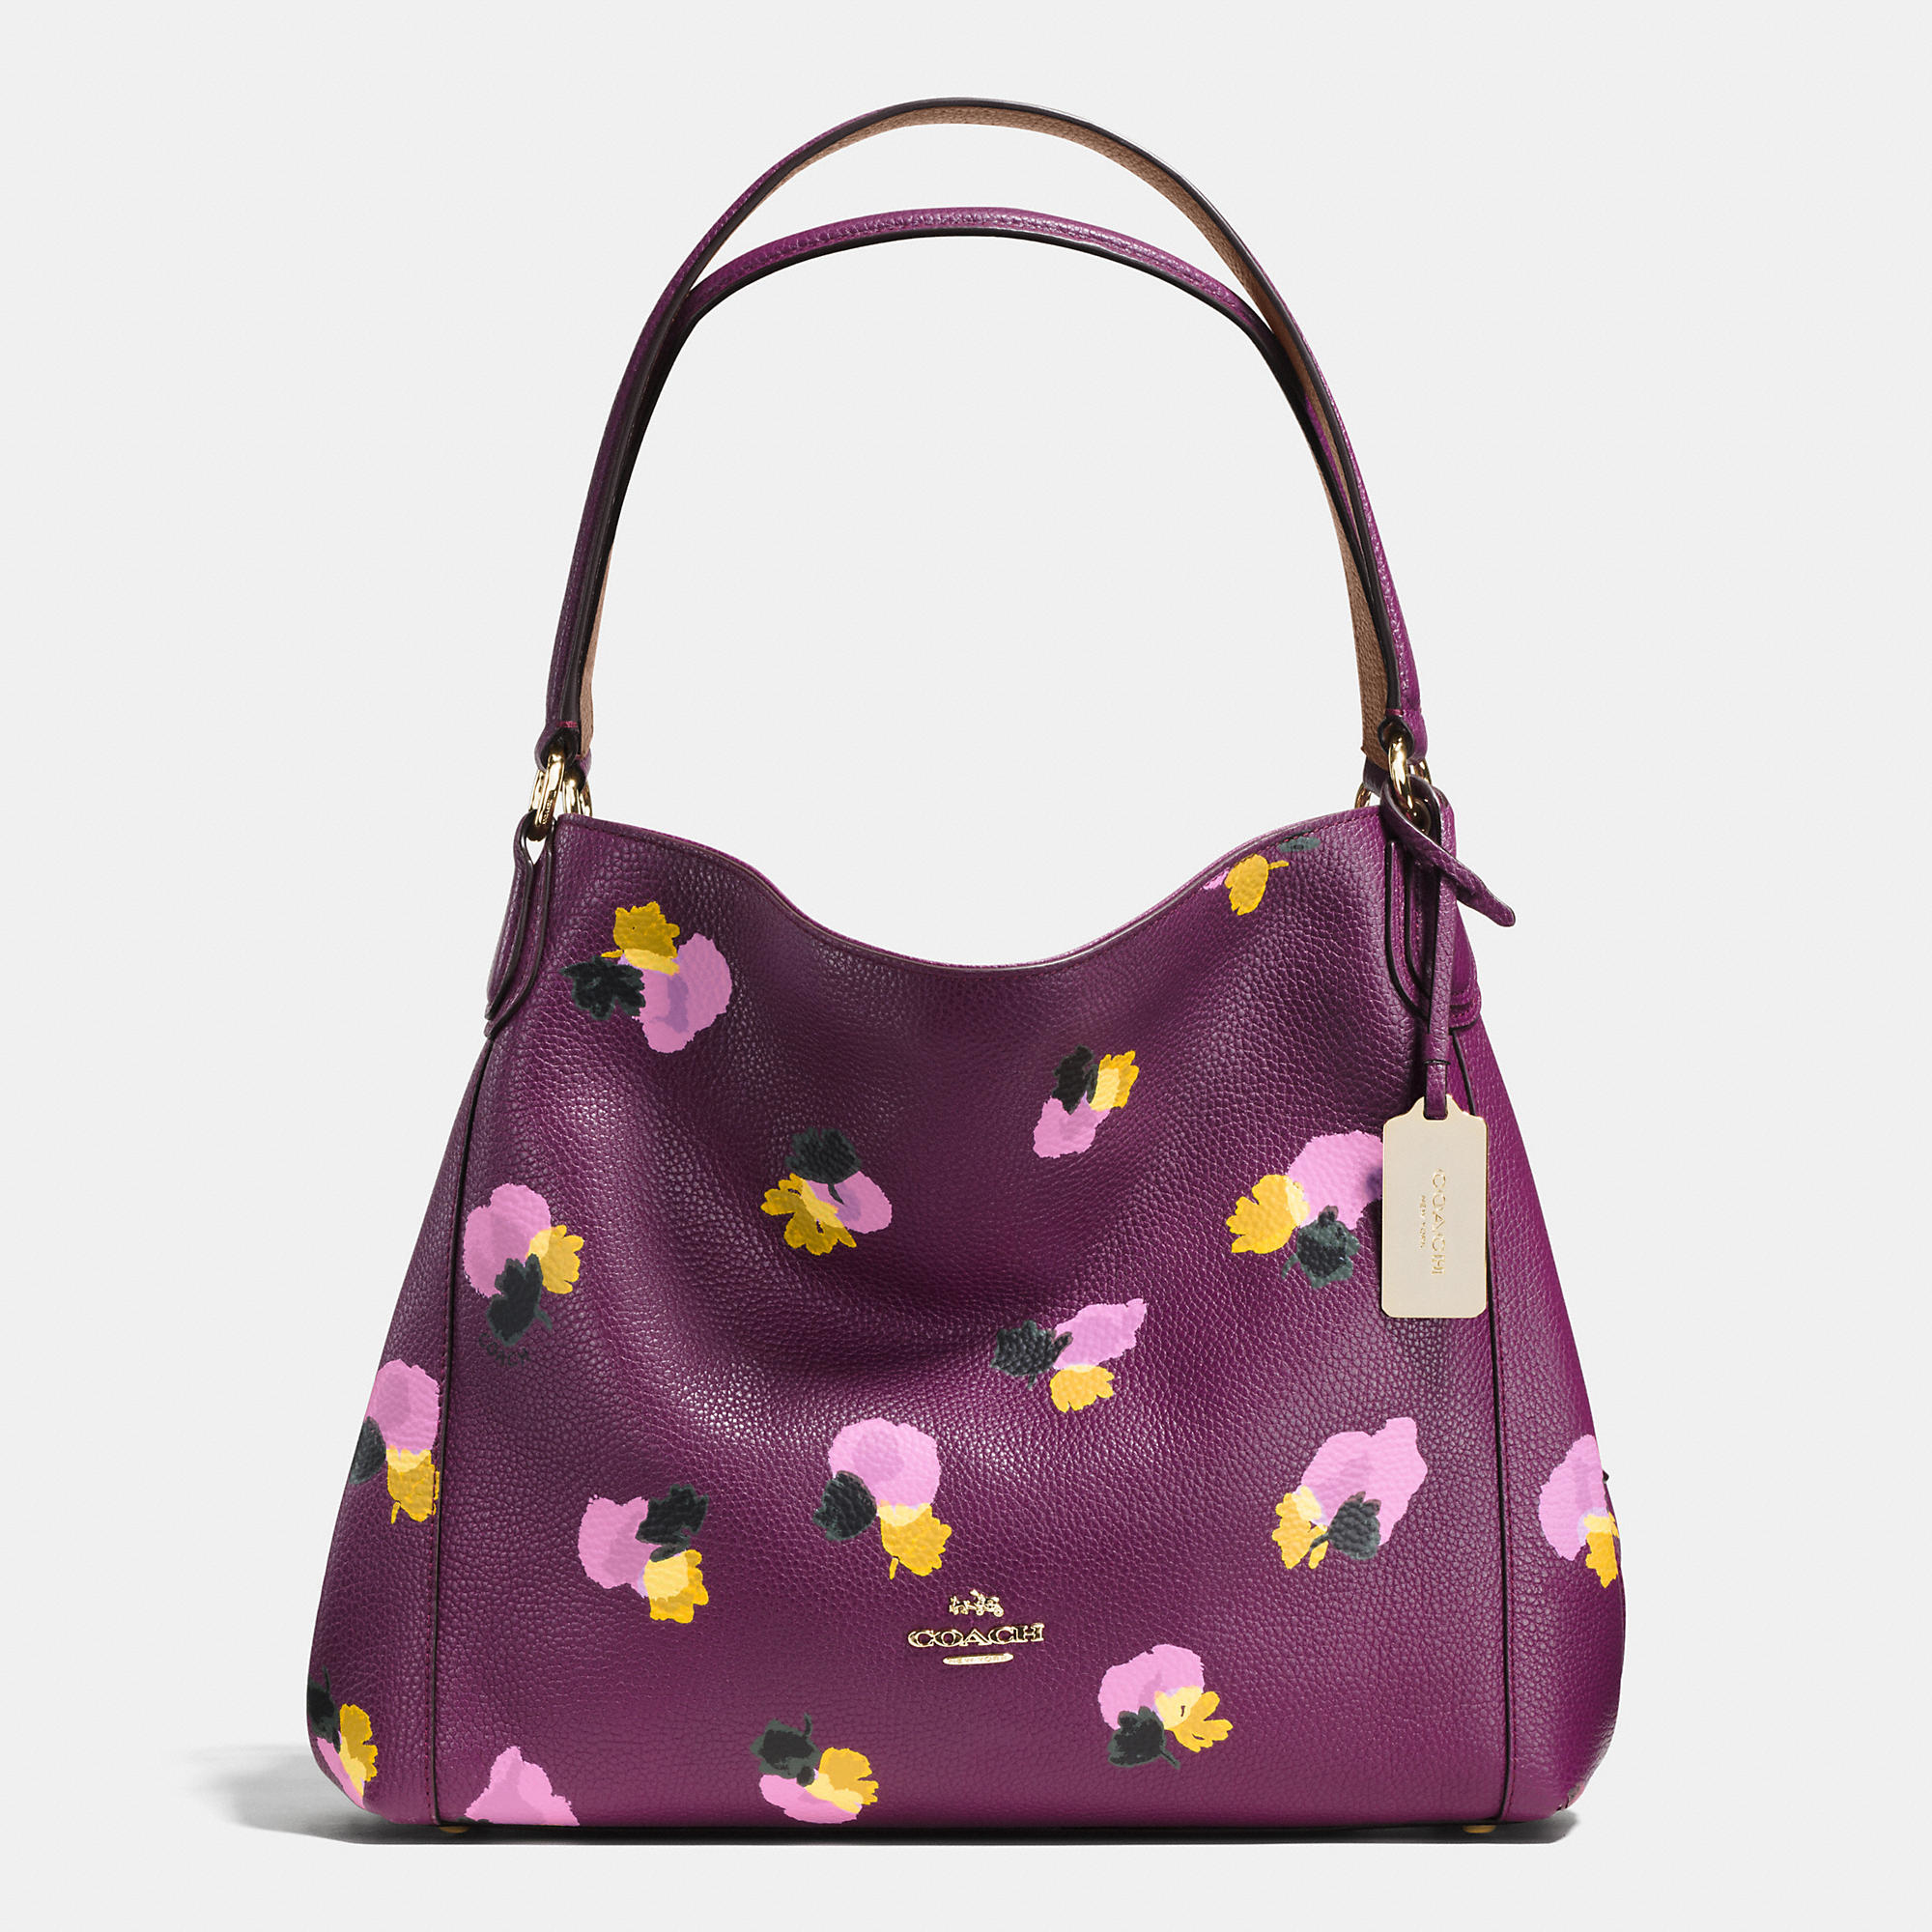 Lyst - Coach Edie Shoulder Bag 31 In Floral Print Leather in Purple